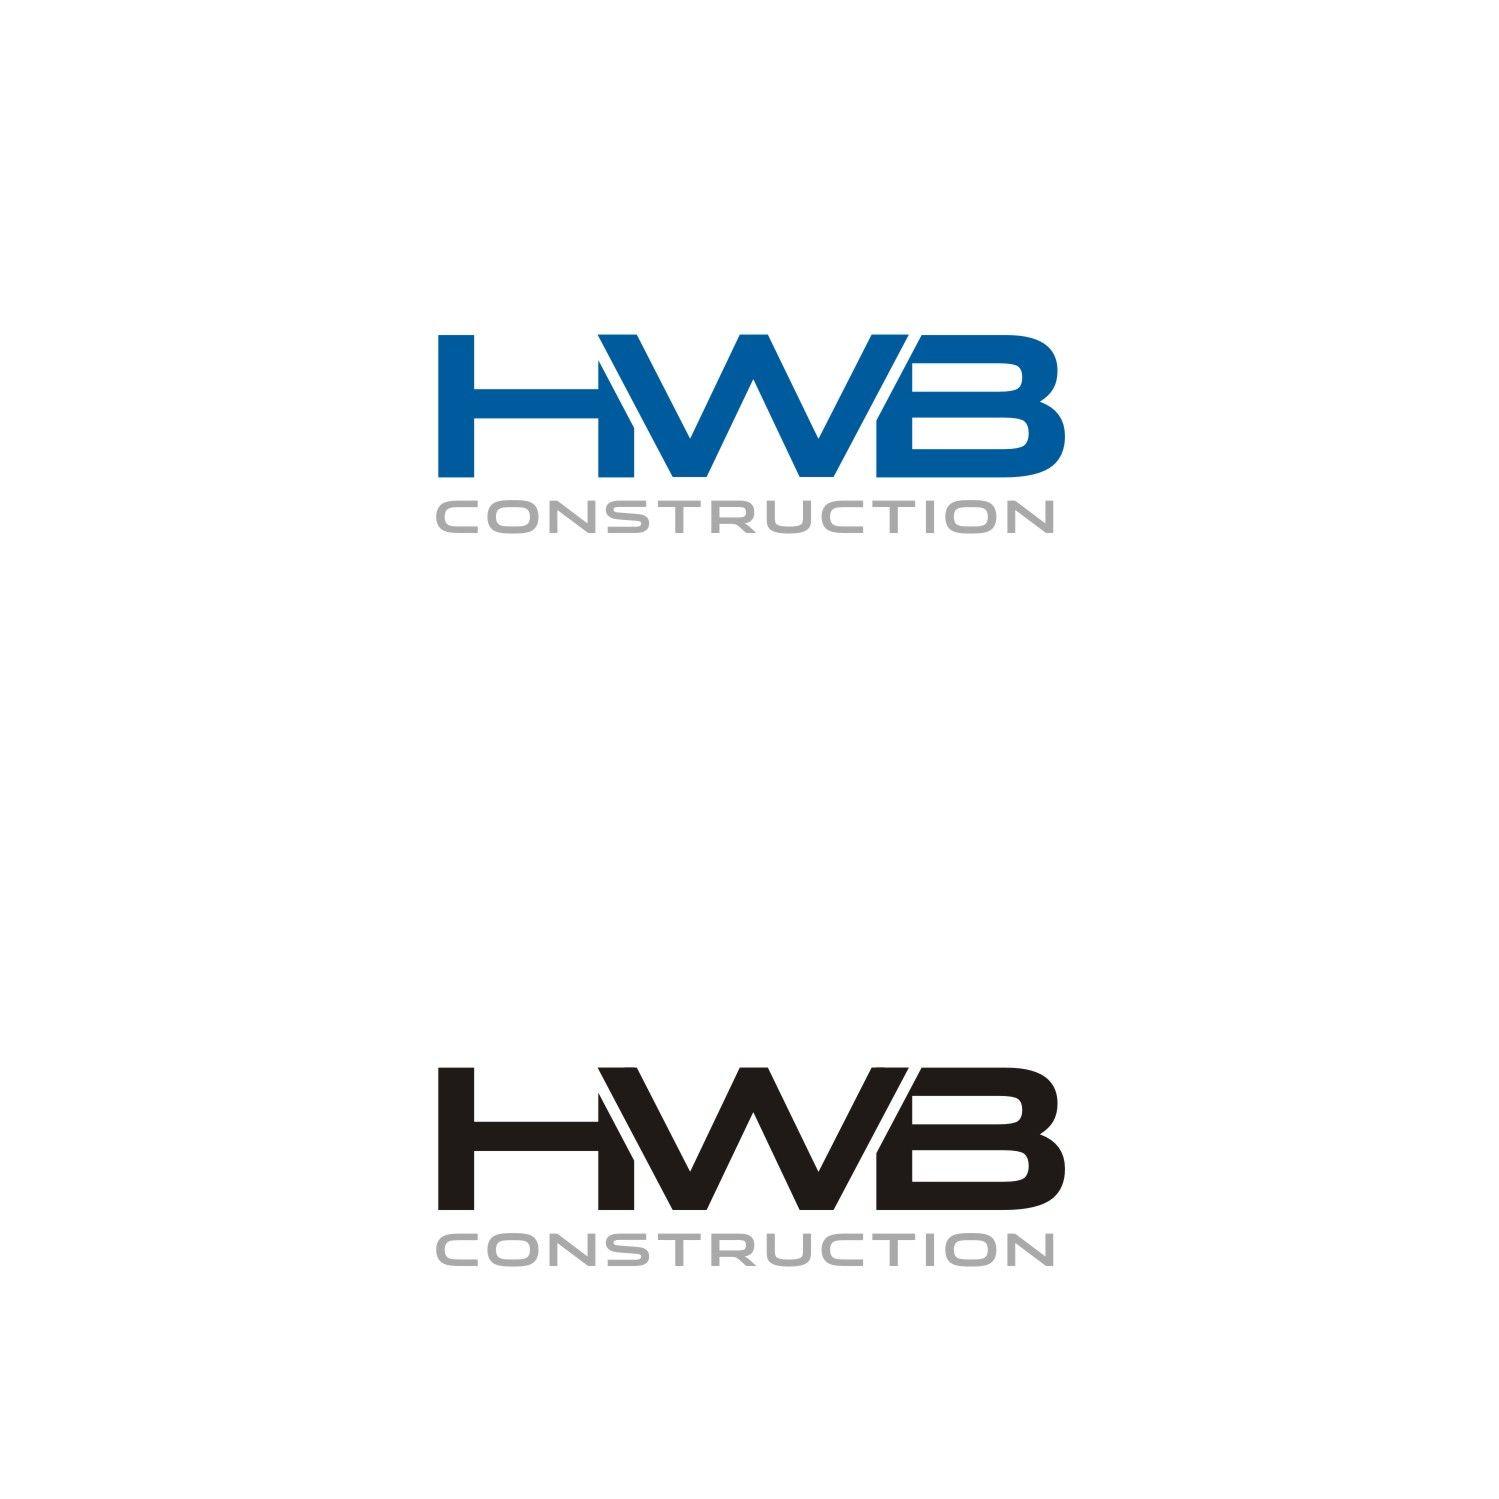 Hwb Logo - Modern, Bold, Construction Logo Design for HWB Construction